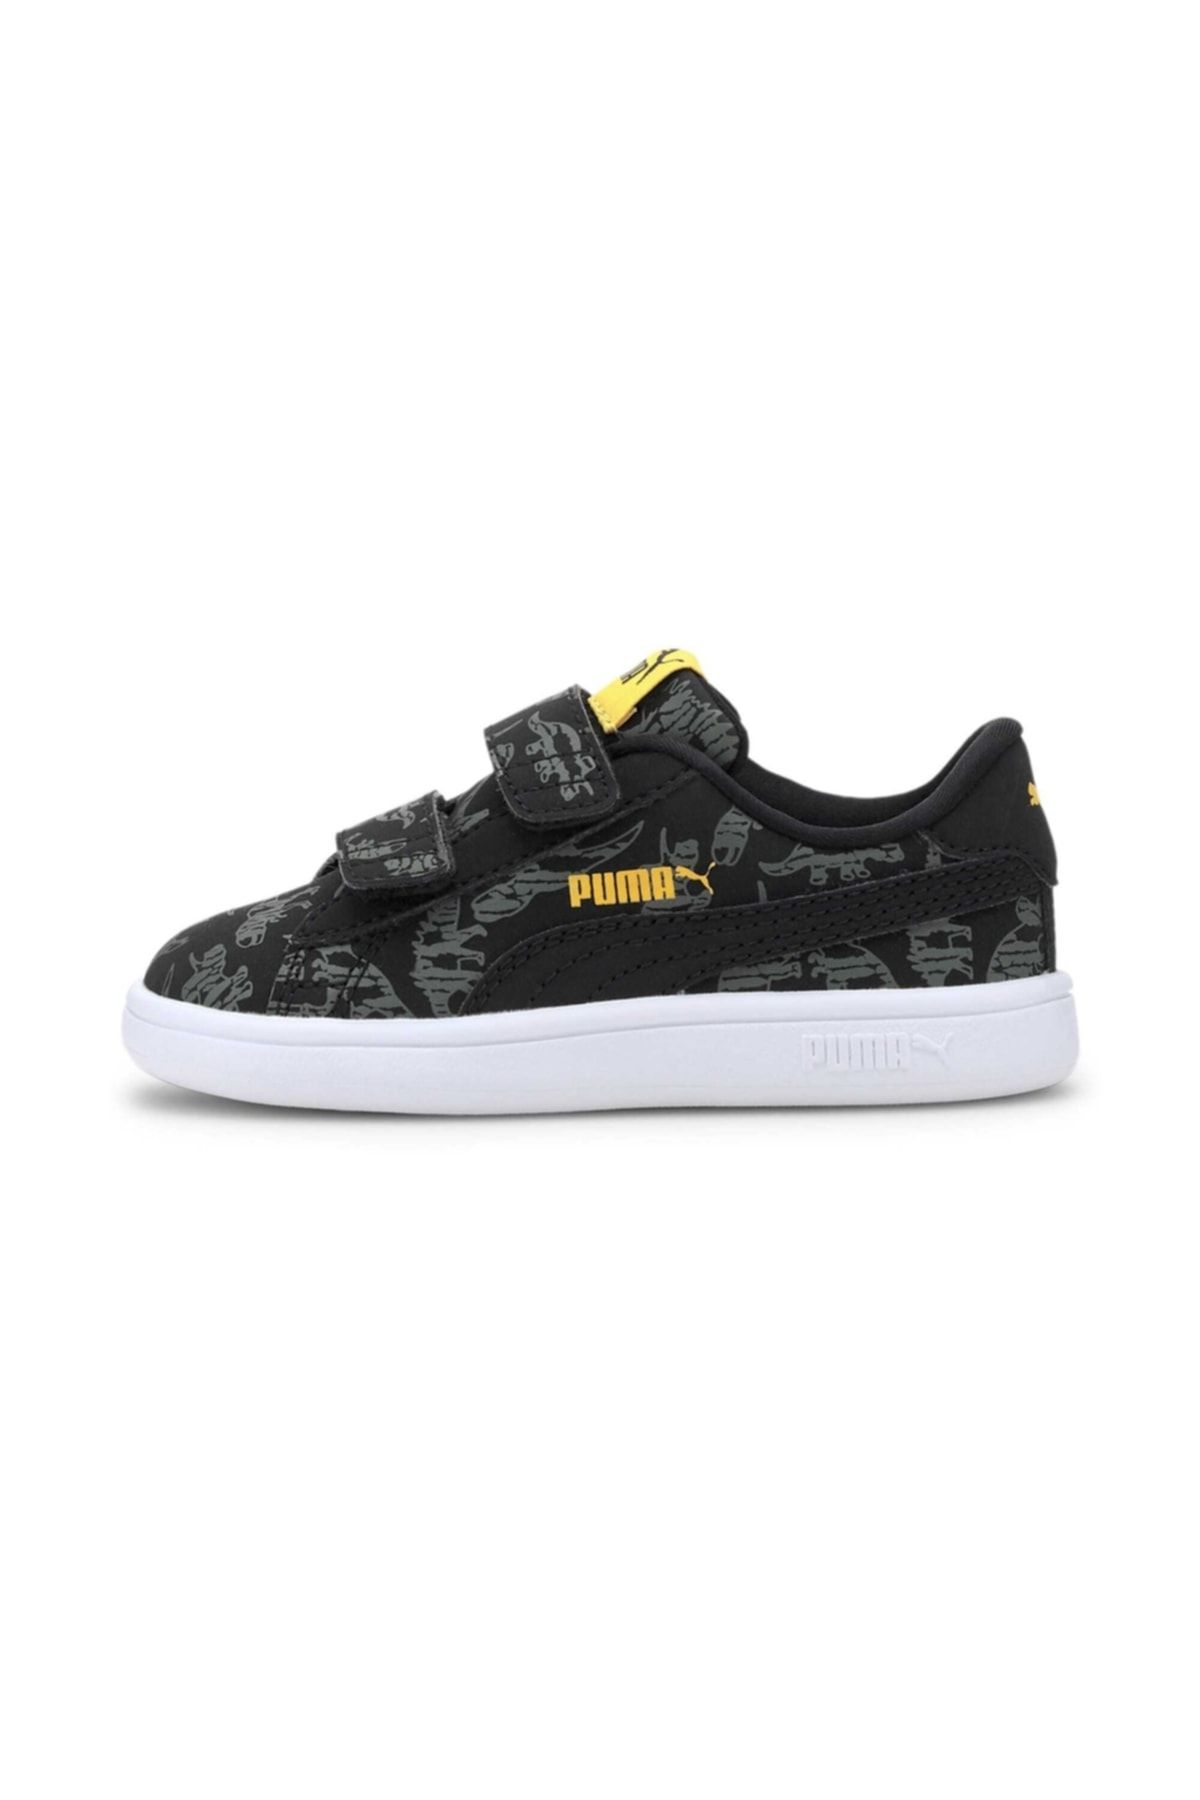 Puma SMASH V2 ARCHEO V IN Siyah Erkek Çocuk Sneaker Ayakkabı 101119298